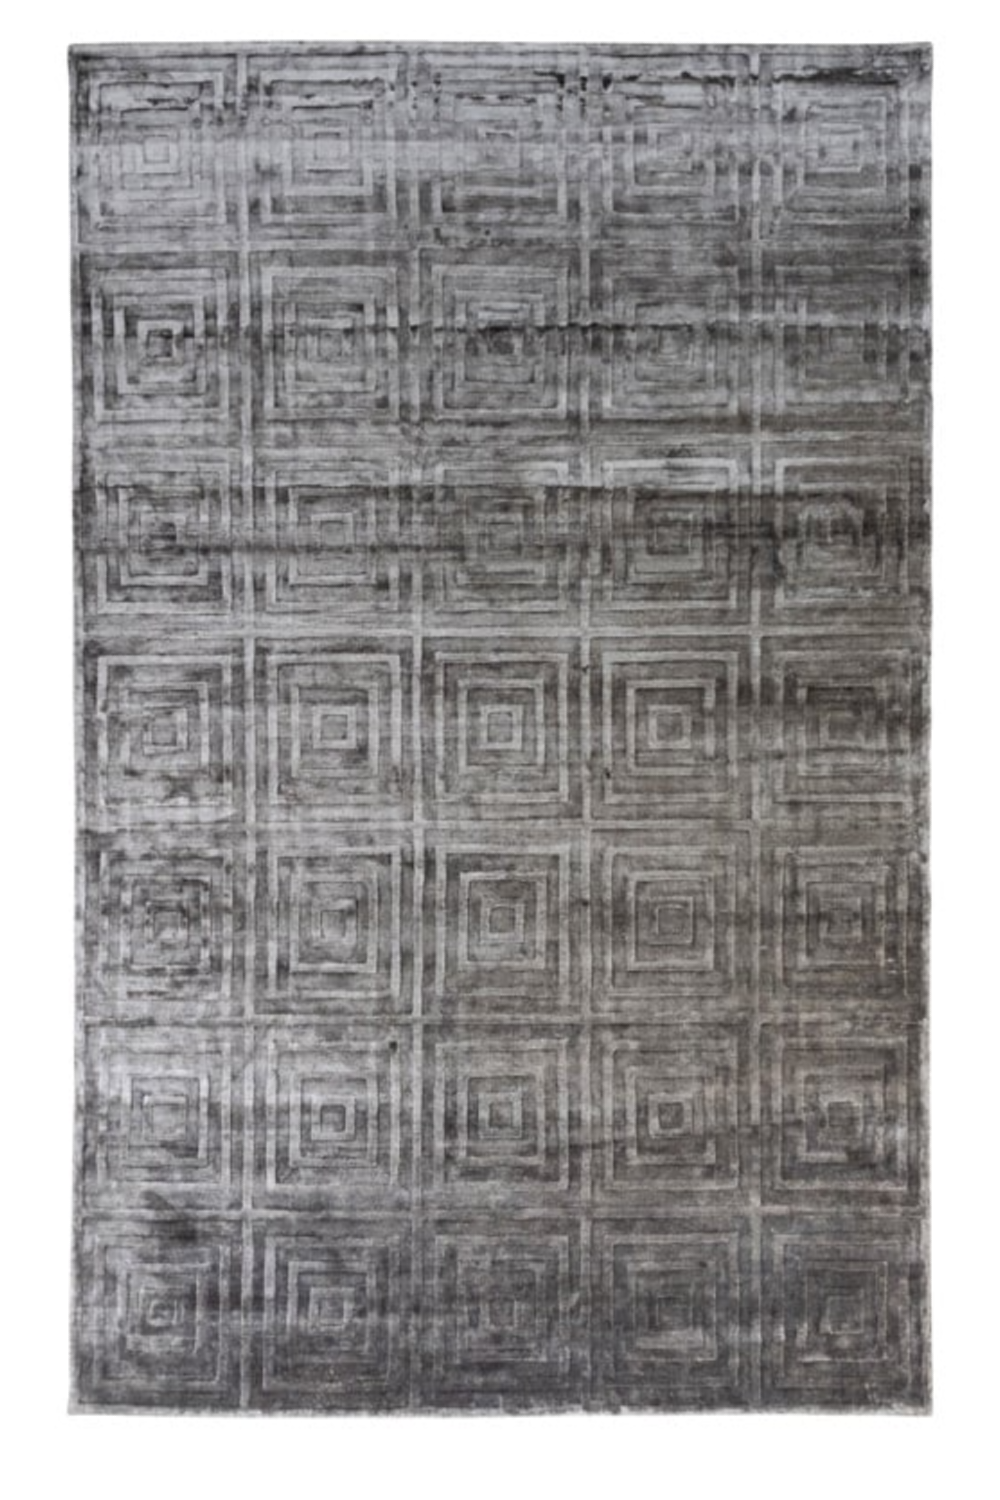 Gray Patterned Carpet | OROA Iggy | Oroa.com